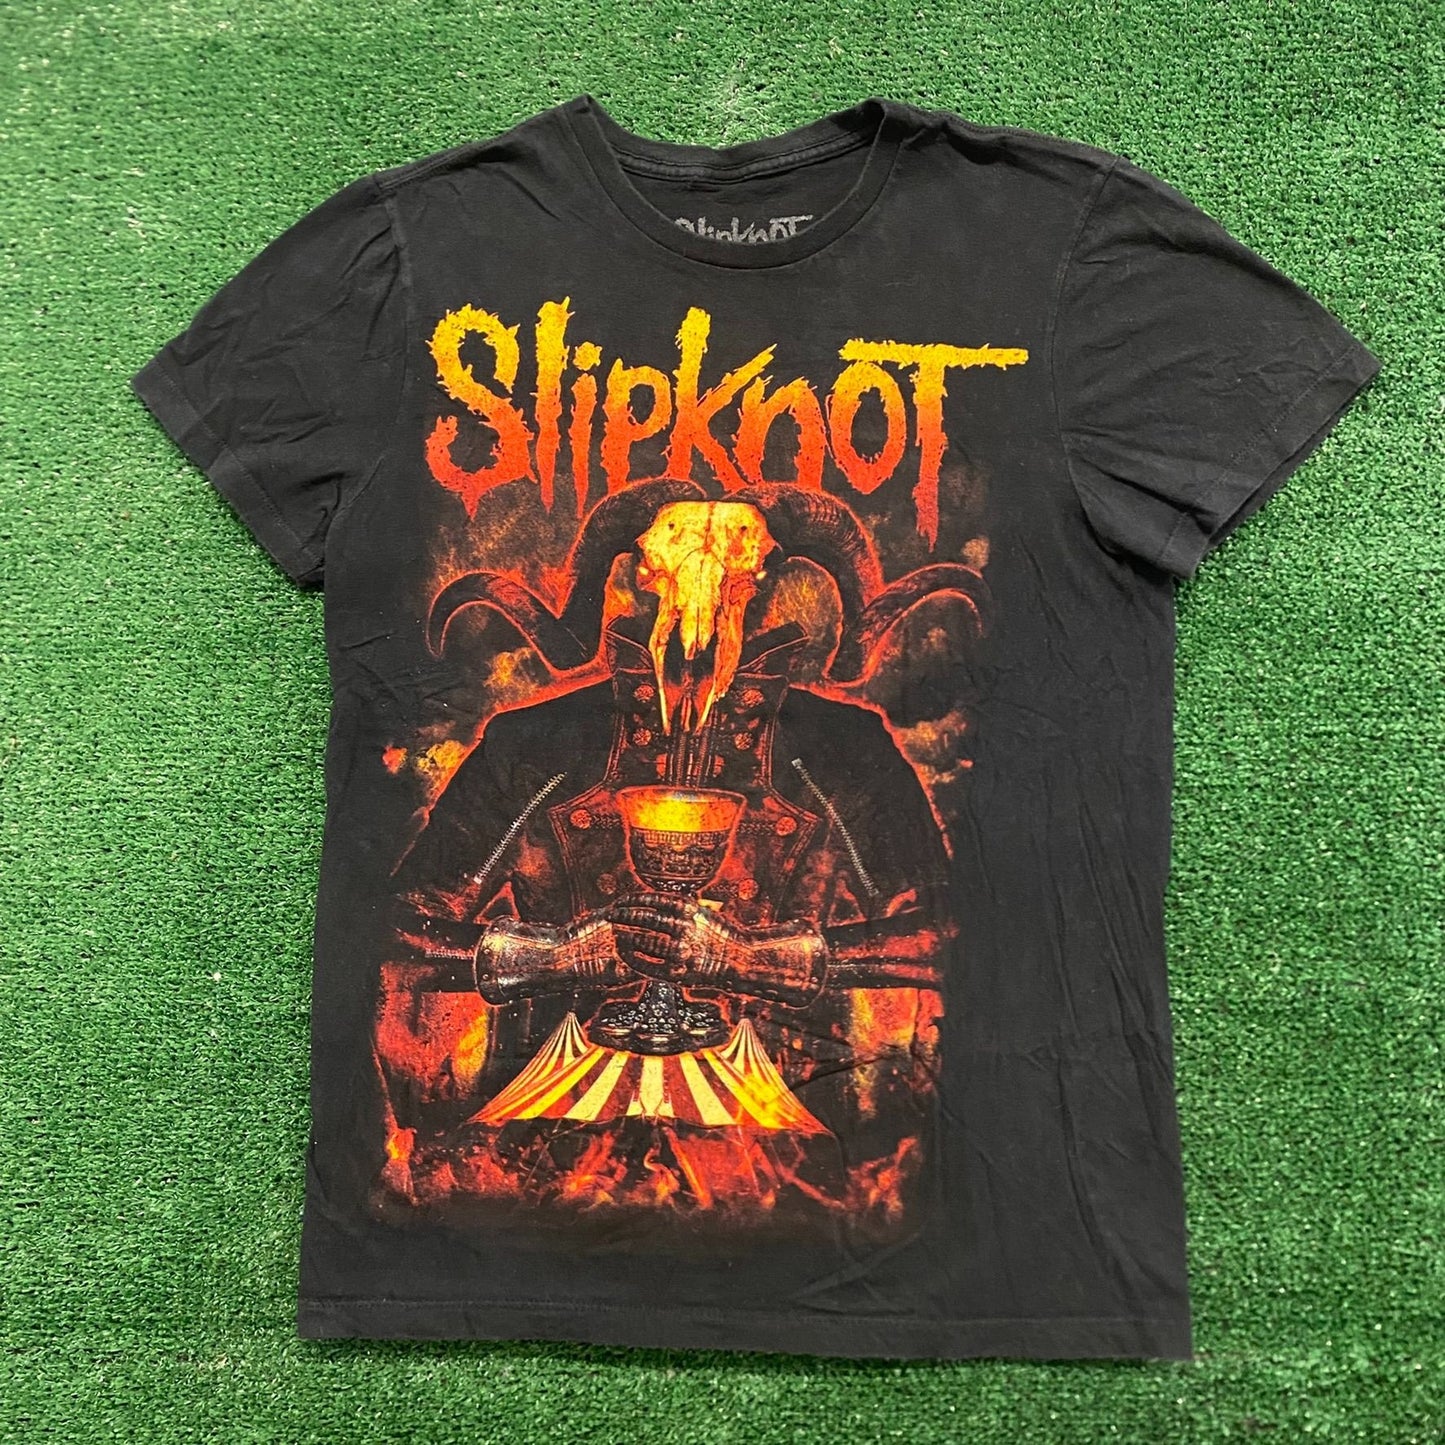 Metal Band T-Shirt Vintage – Thrift Agent Slipknot